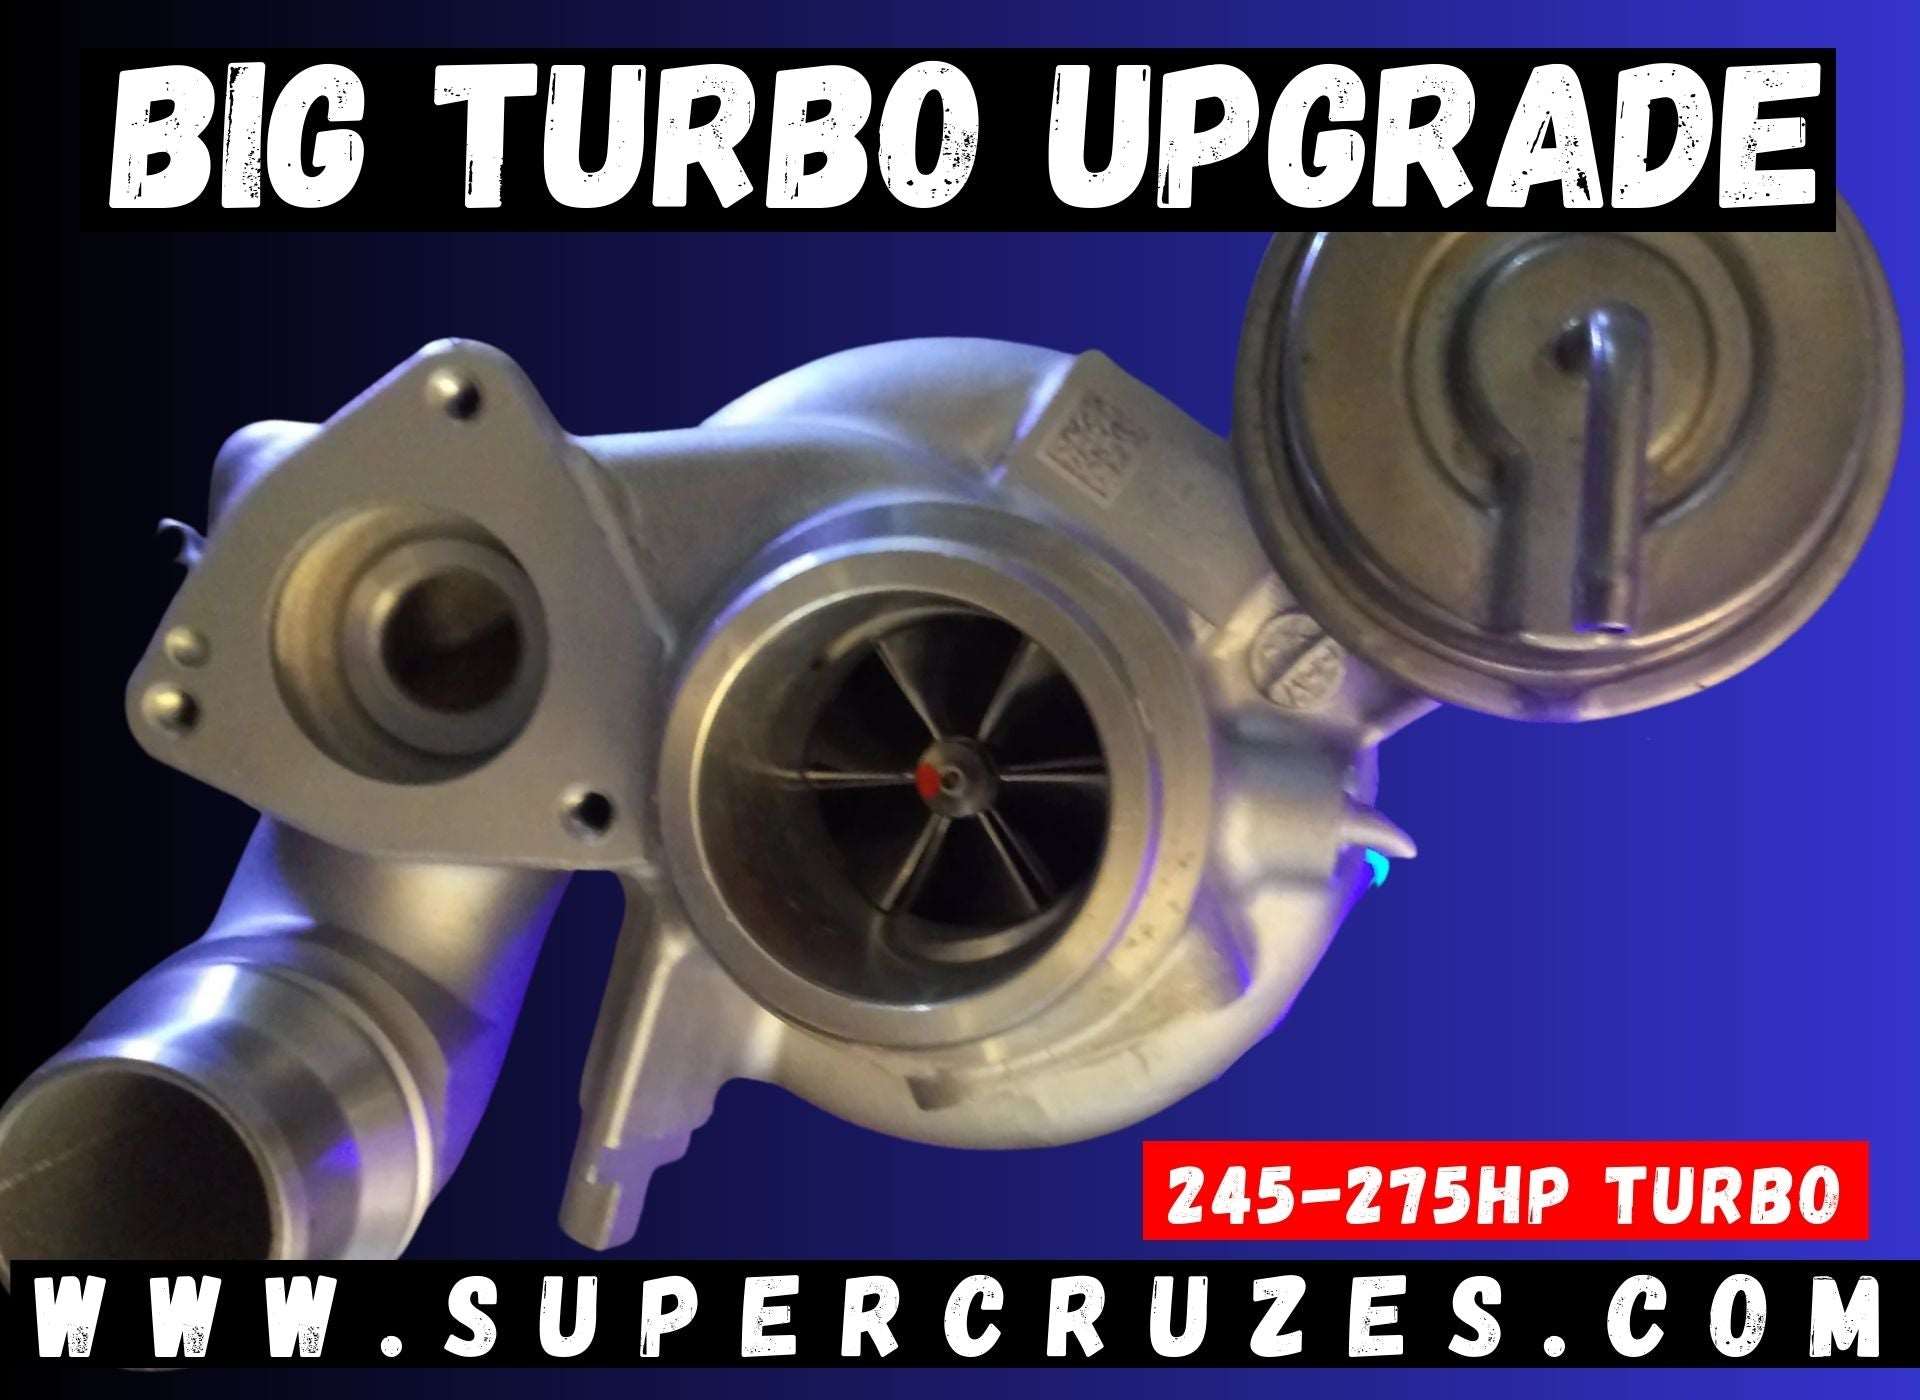 Malibu Equinox 1.5 turbo upgrades